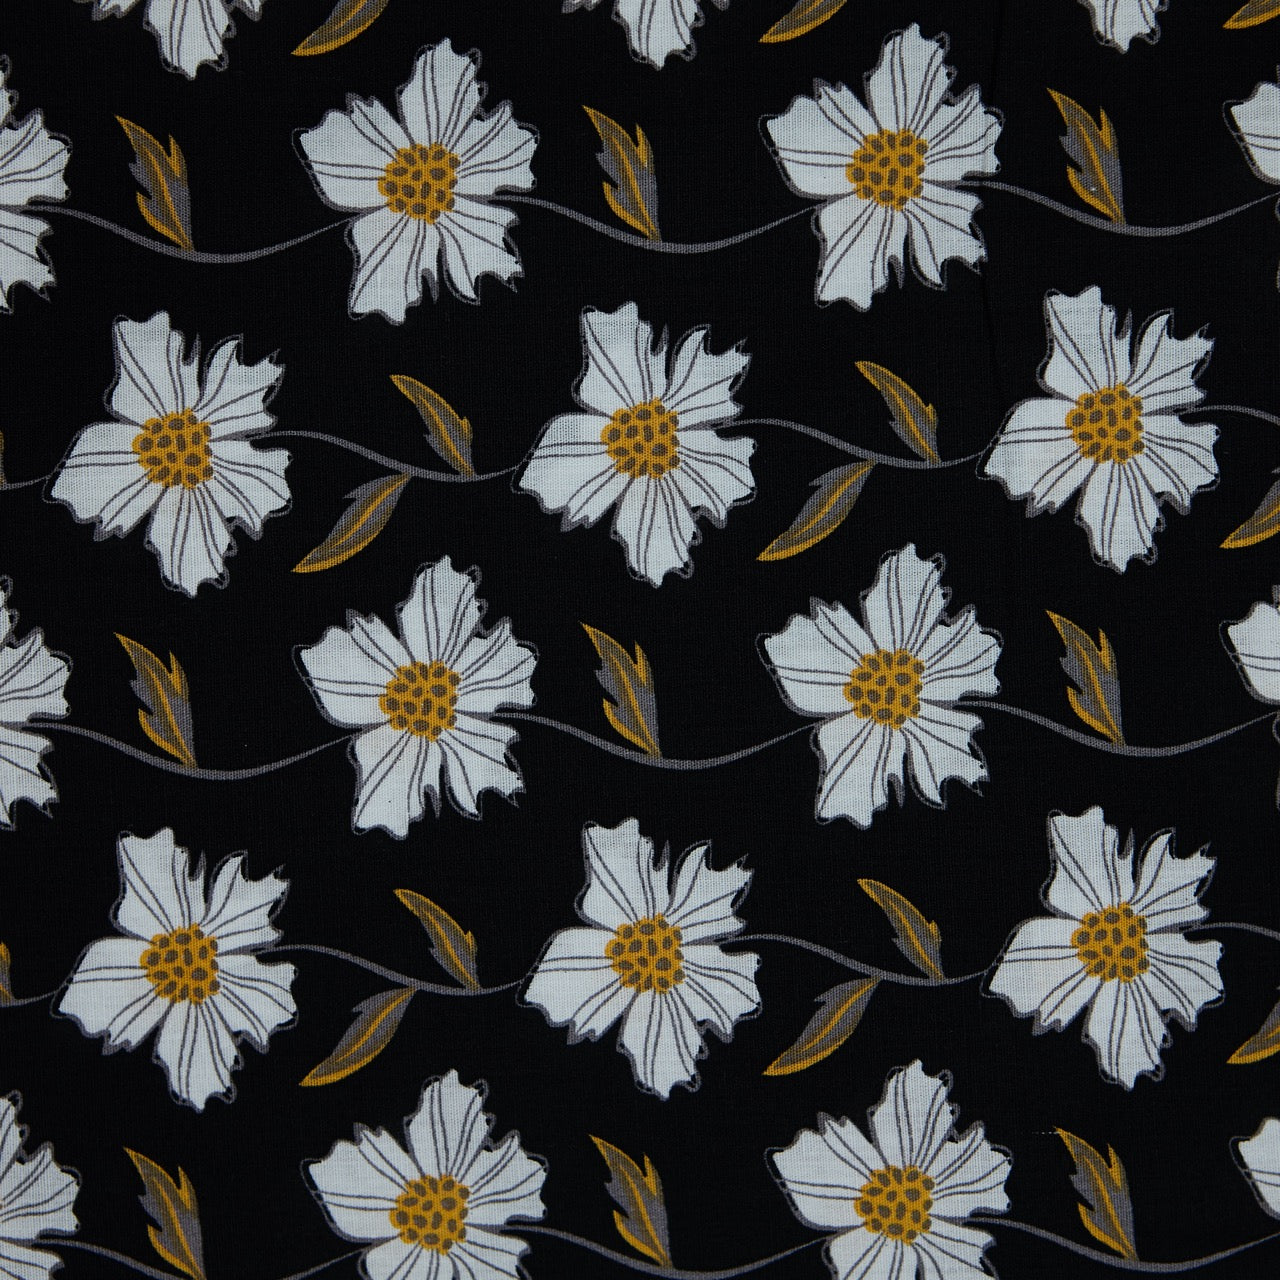 Cotton Floral - Daisy Chain - Black (detail)